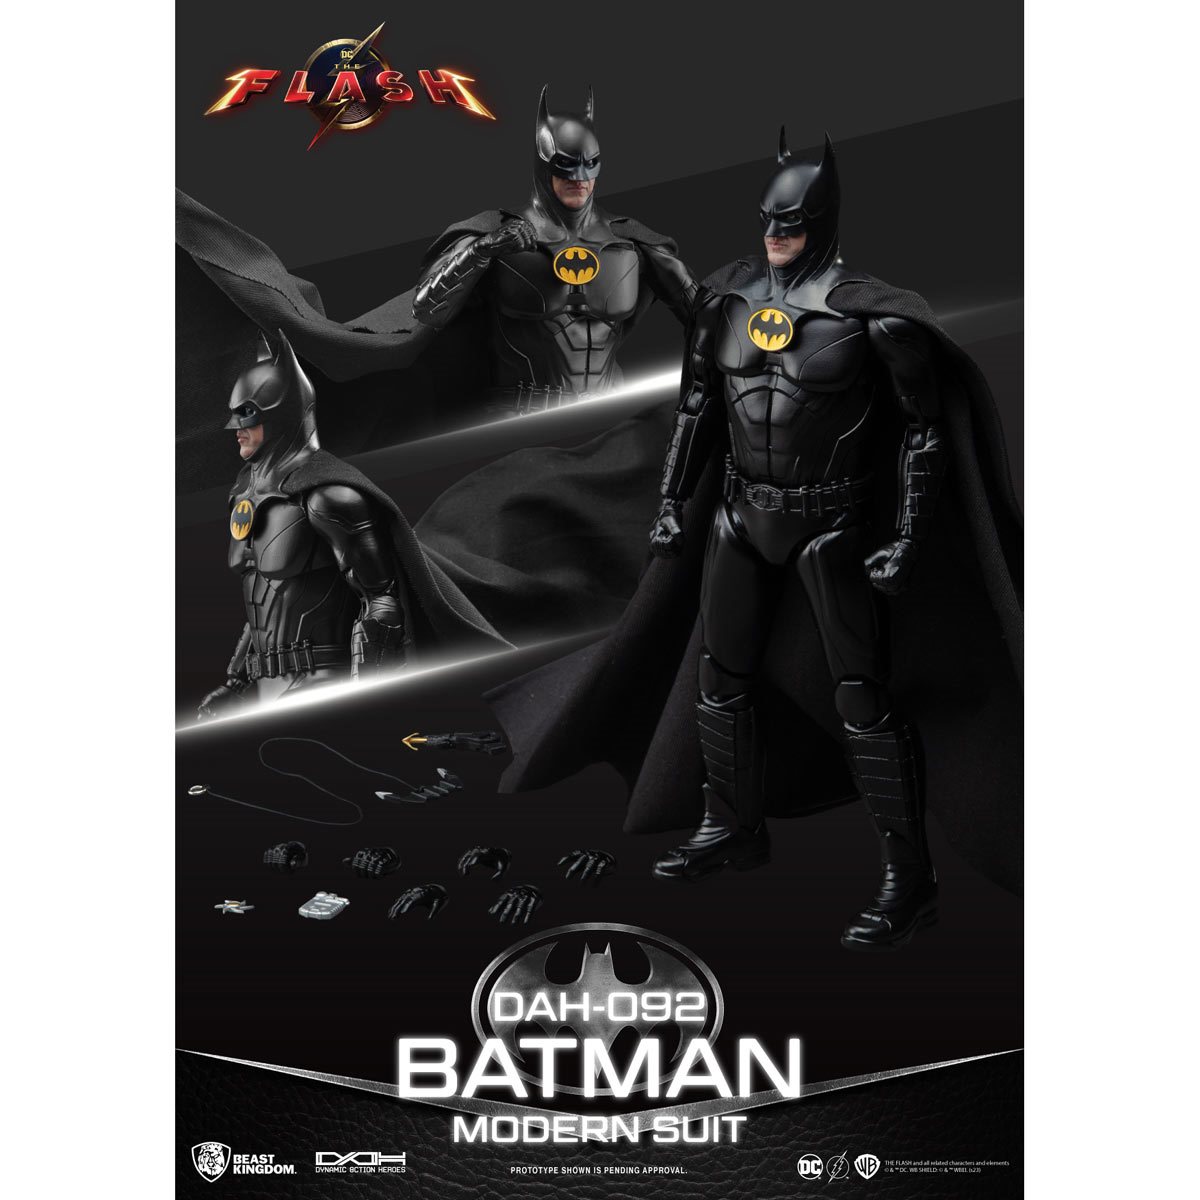 The Batman™ - Hero Poster